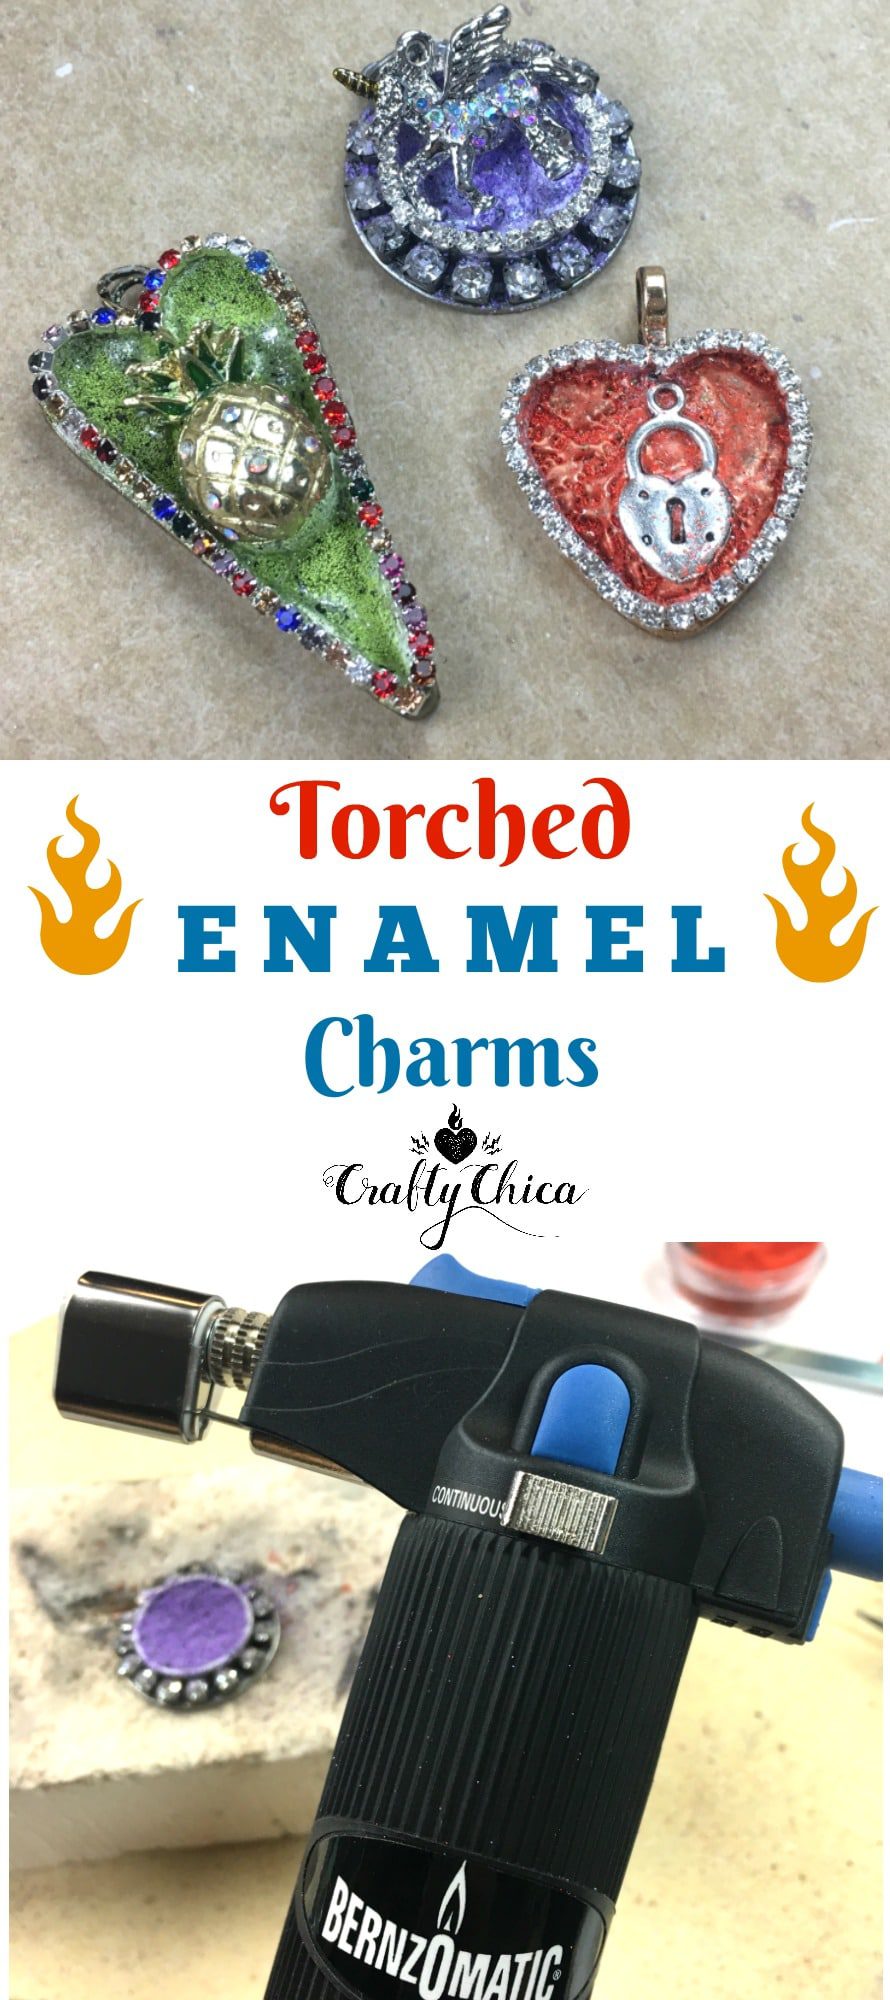 Torched enamel jewelry by CraftyChica.com